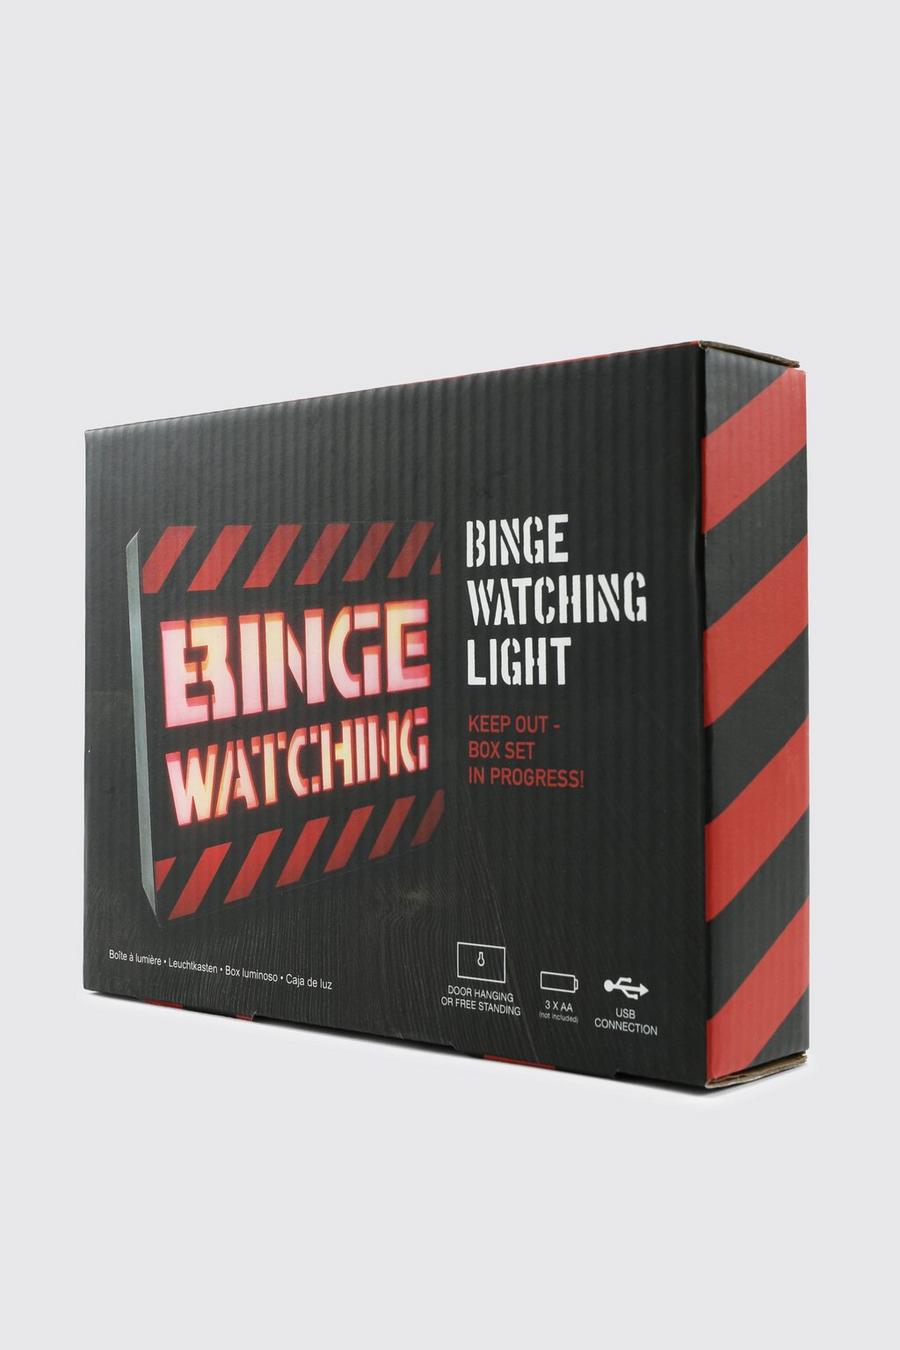 Décoration lumineuse à slogan Binge Watching - Format A5, Clear